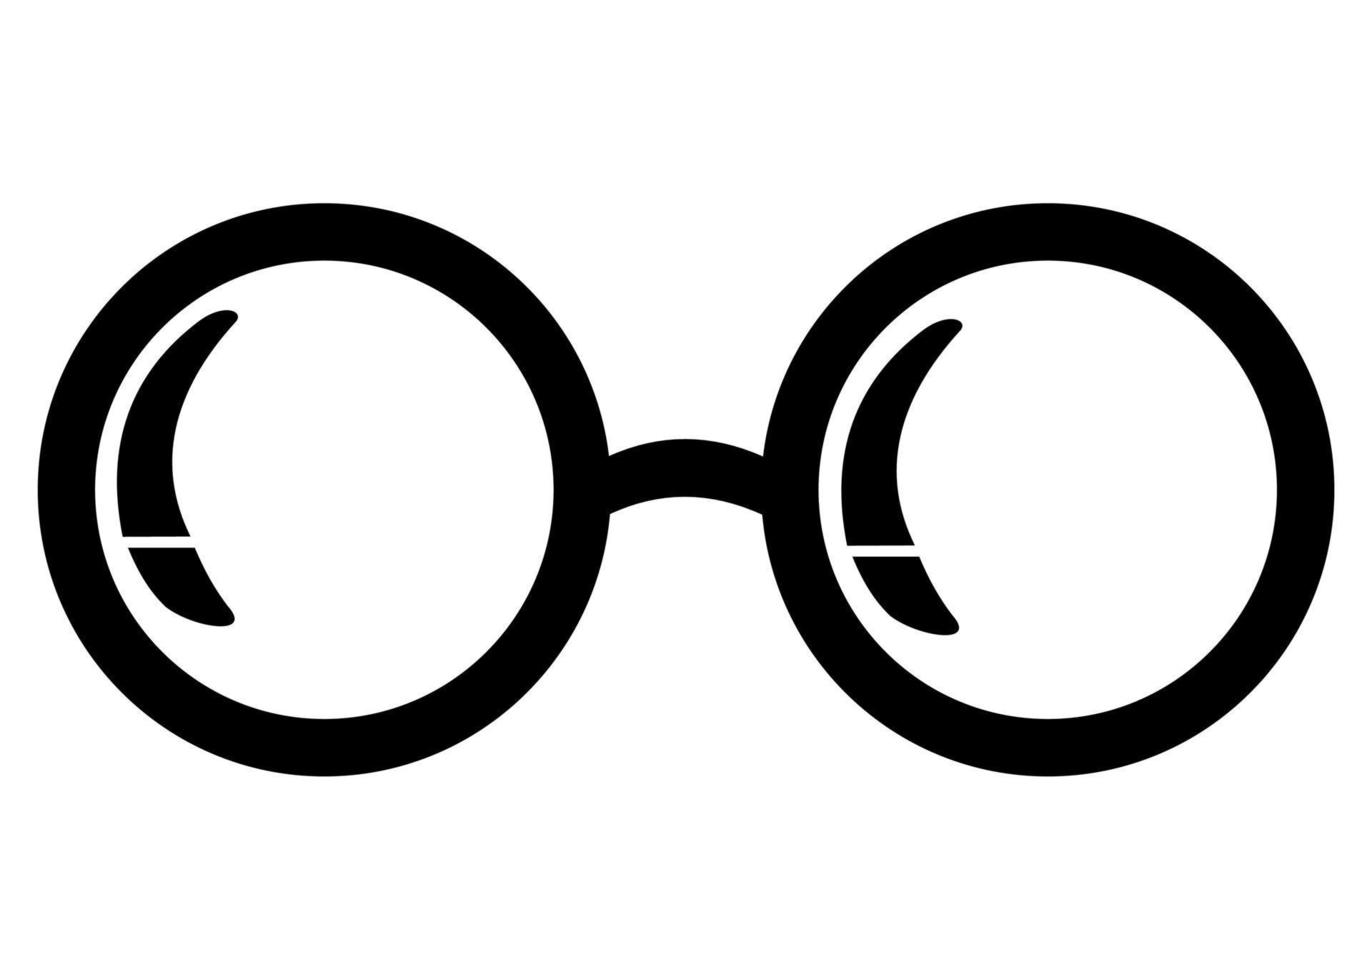 Glasses icon on white background. Illustration isolated vector sign symbol.